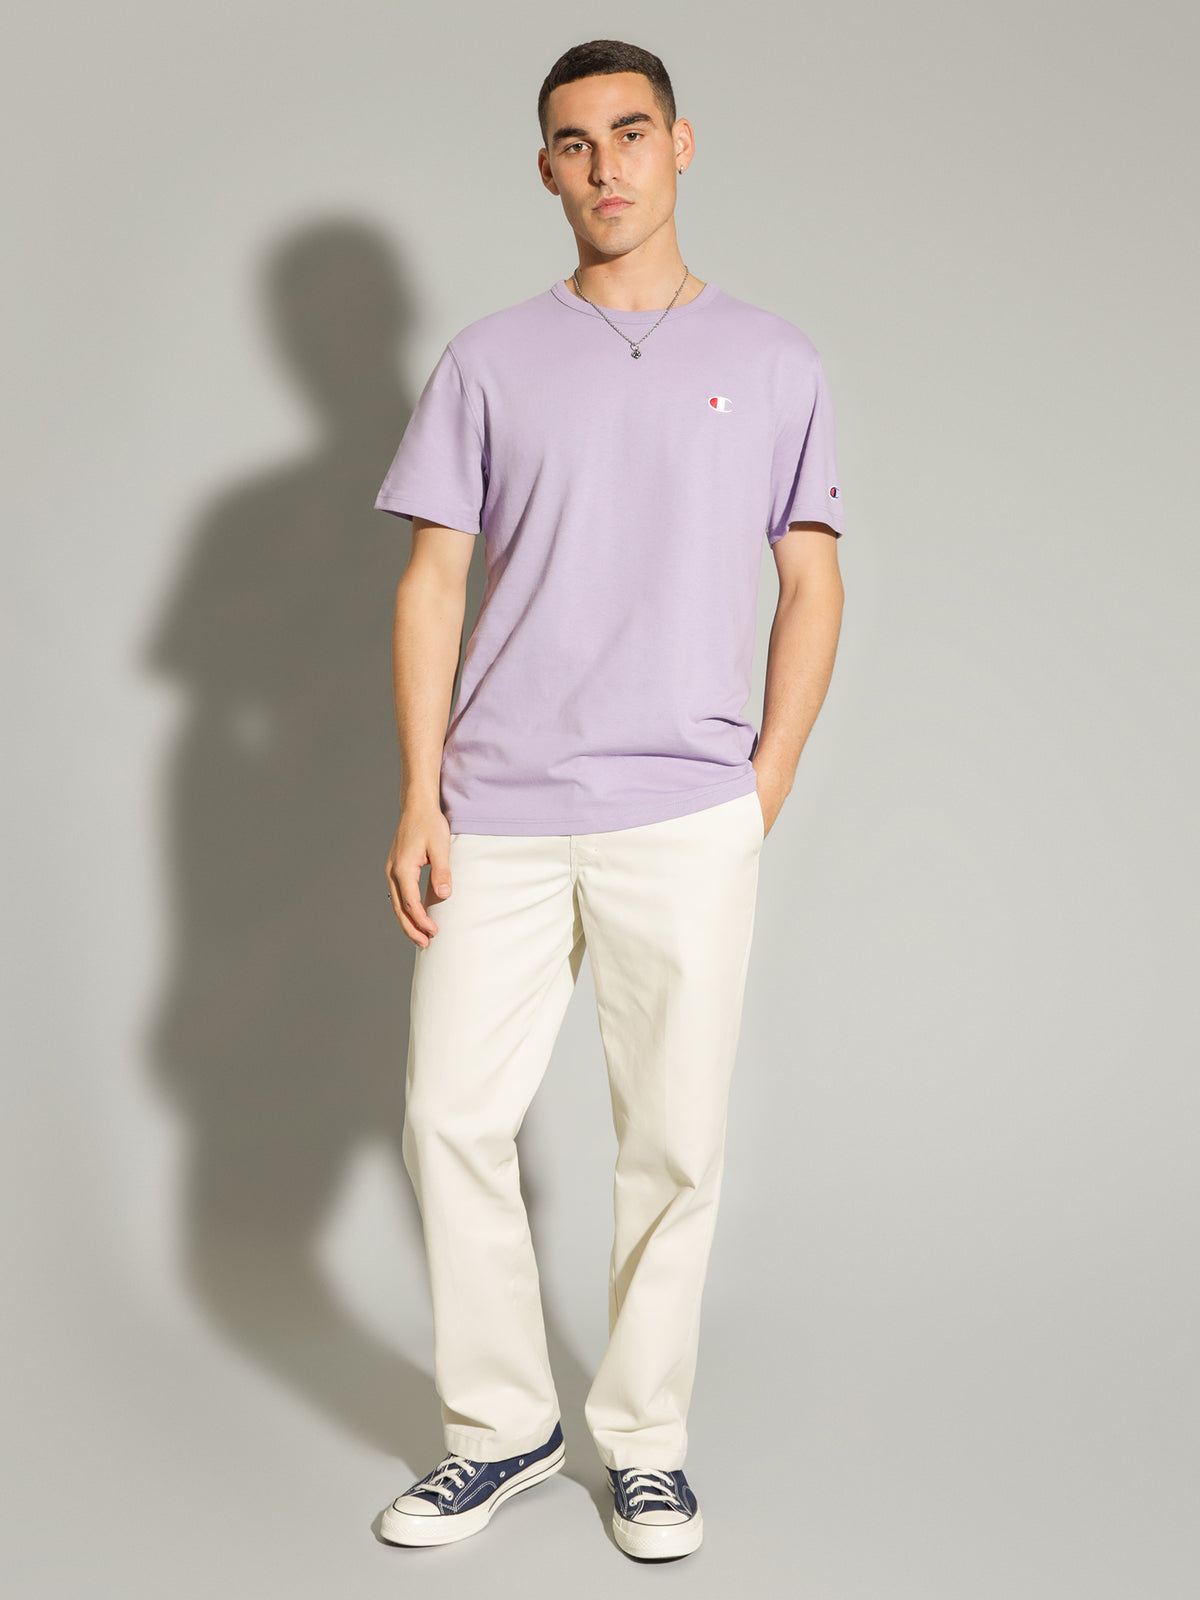 Reverse Weave T-Shirt in Lavender